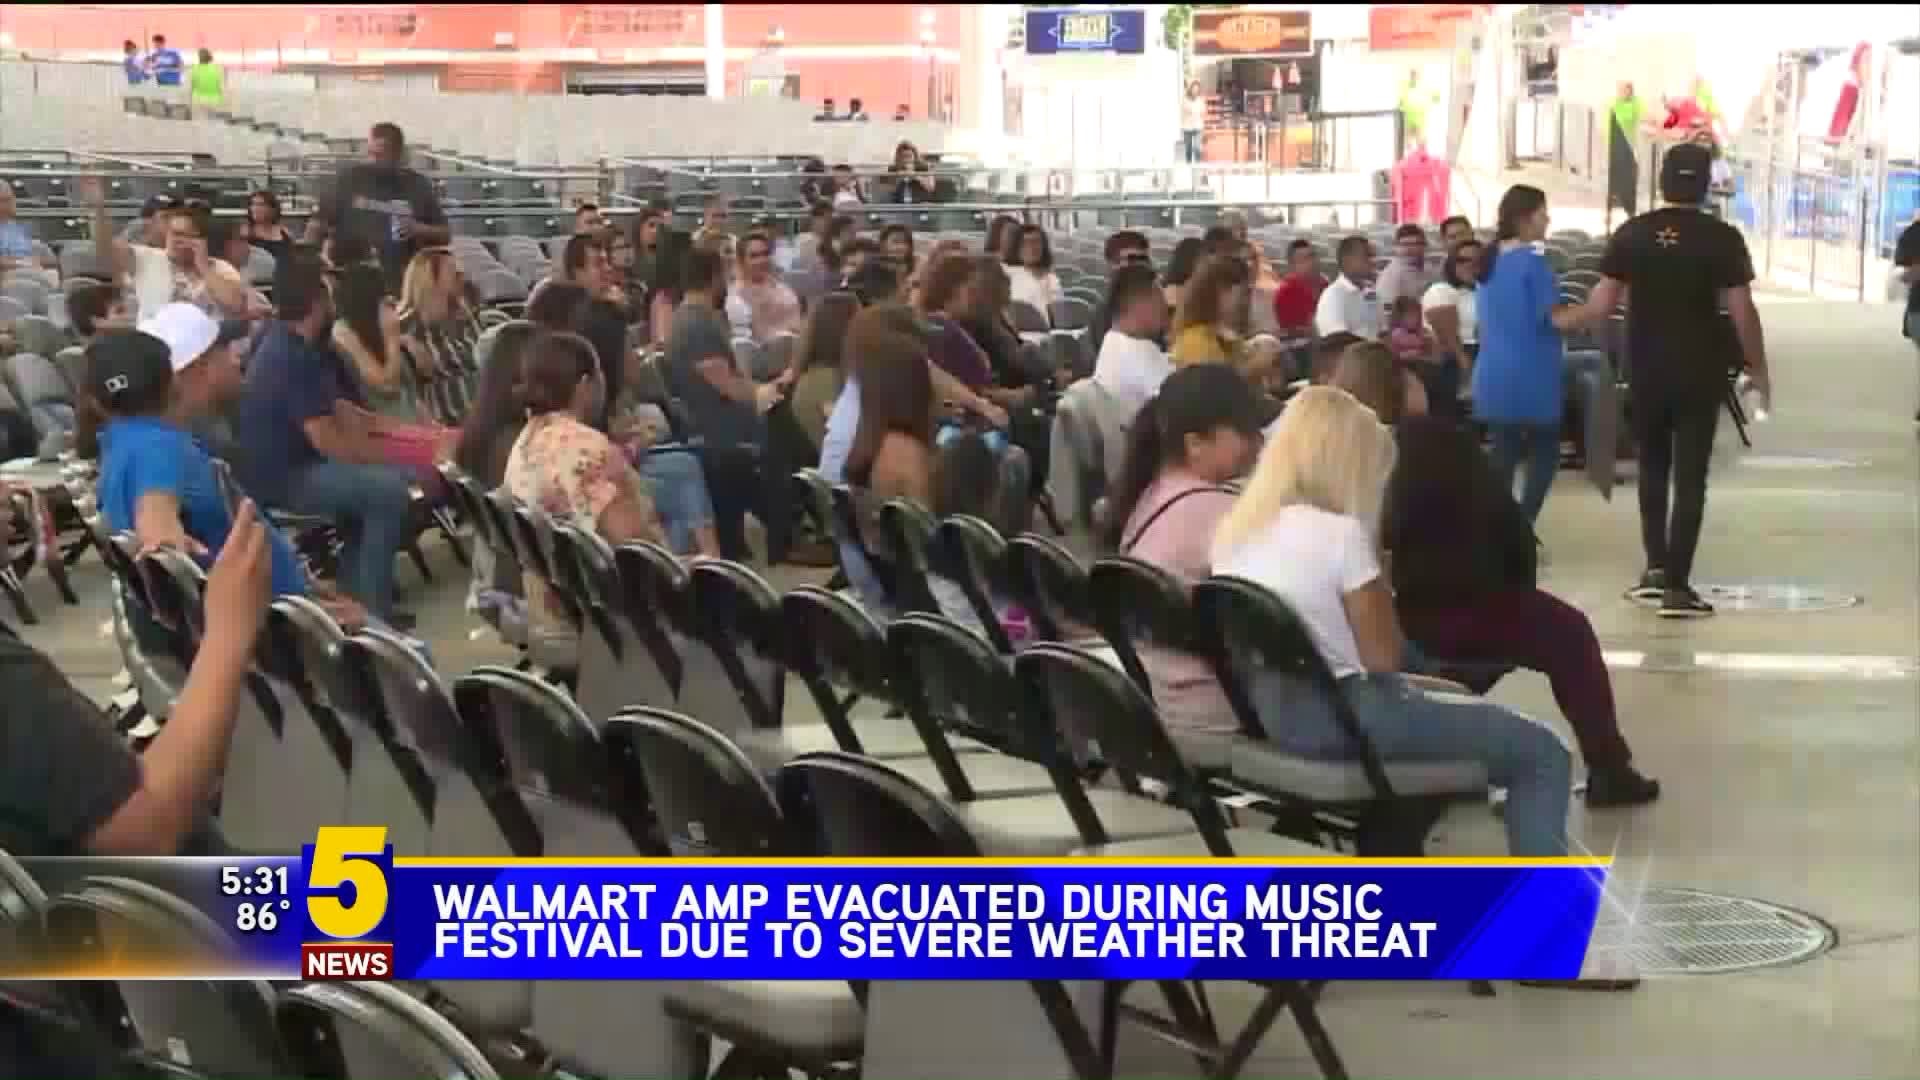 Walmart AMP Event Cancelled